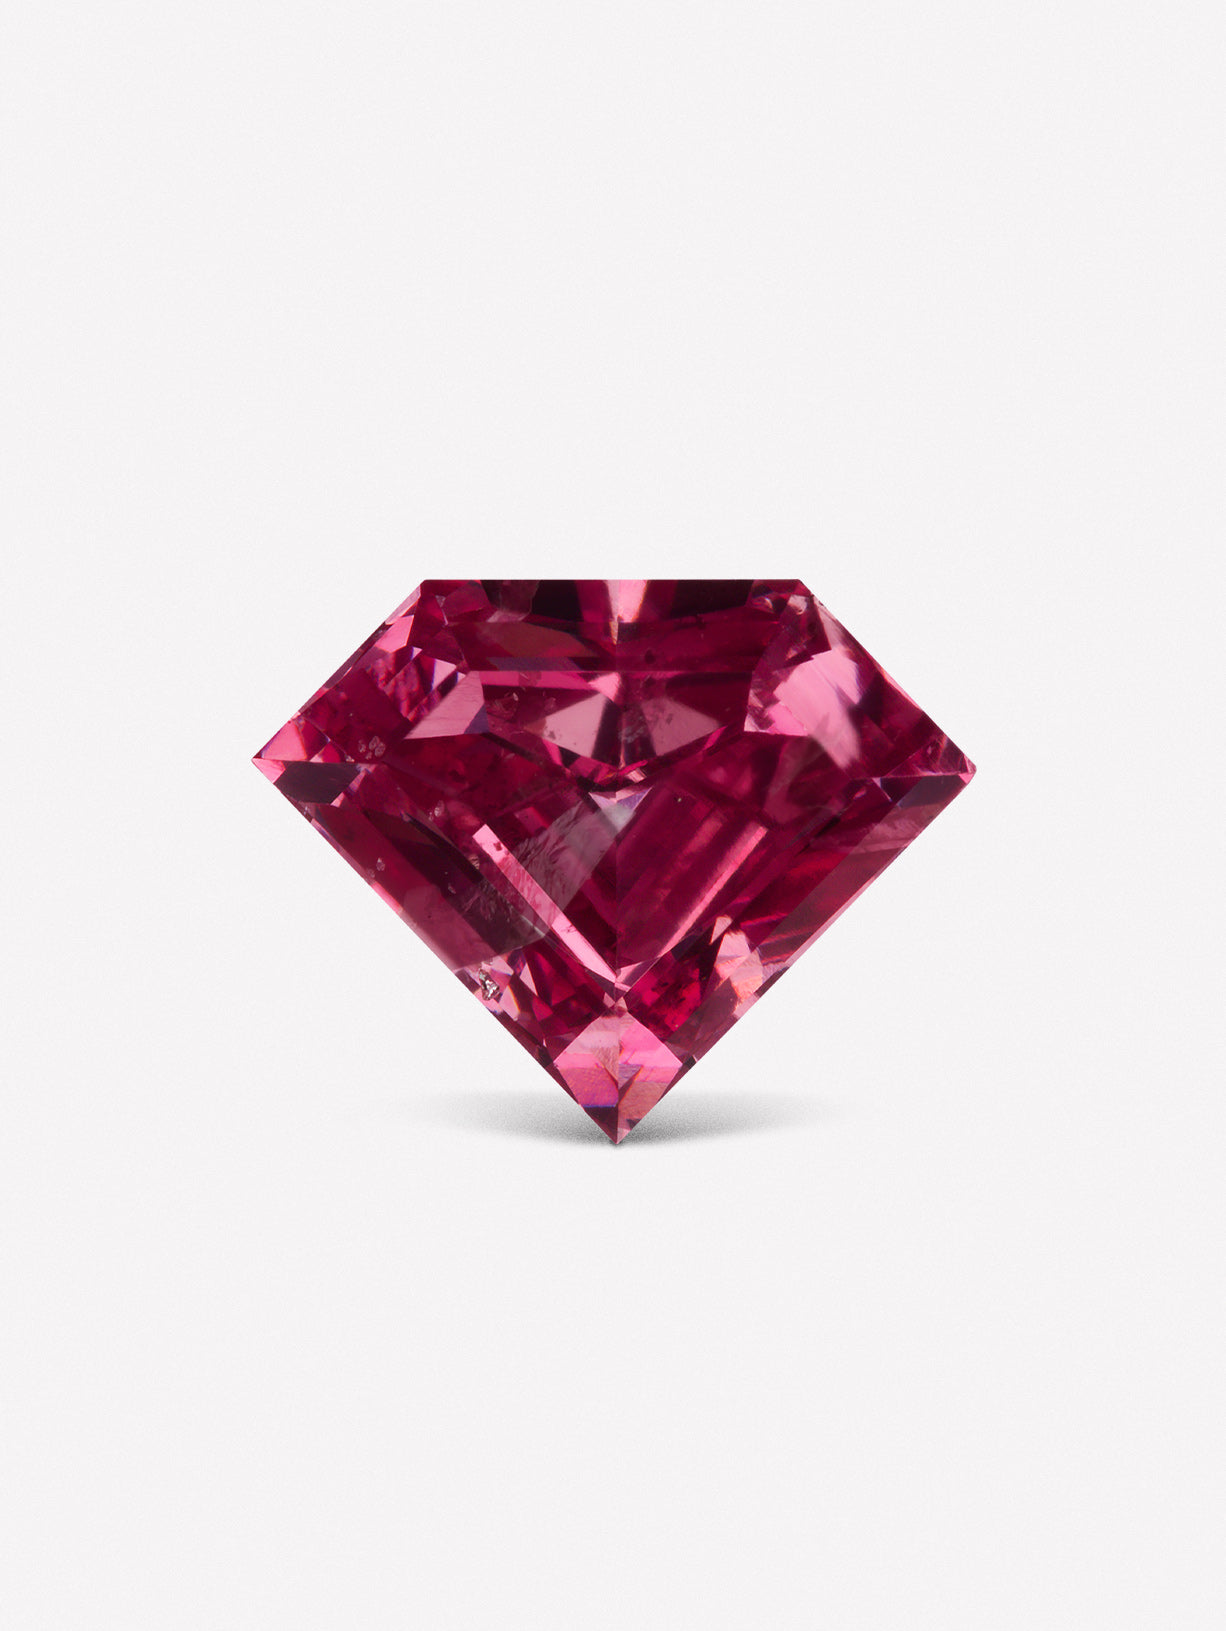 Shield Cut Argyle Pink™ Diamond - Pink Diamonds, J FINE - J Fine, Pink Diamond - Pink Diamond Jewelry, shield-cut-fancy-vivid-purplish-pink-diamond - Argyle Pink Diamonds